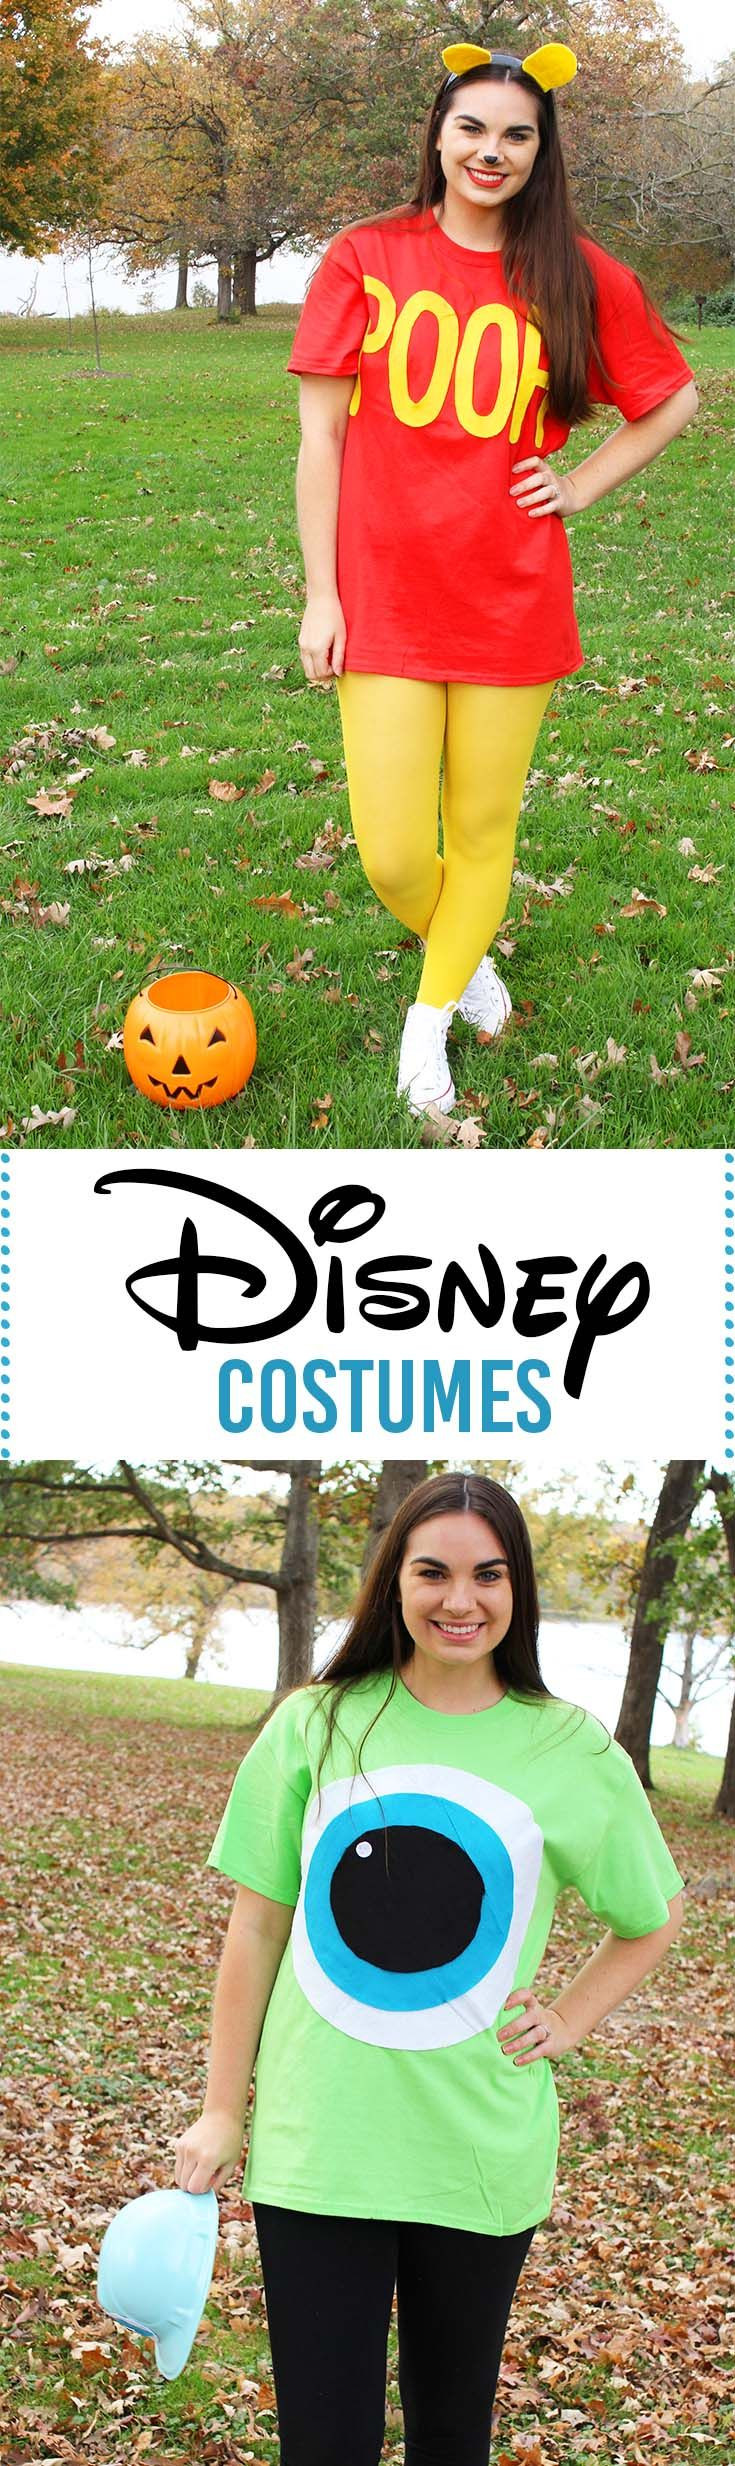 Best ideas about Disney Character Costume DIY
. Save or Pin De 25 bedste idéer inden for Cartoon costumes på Now.